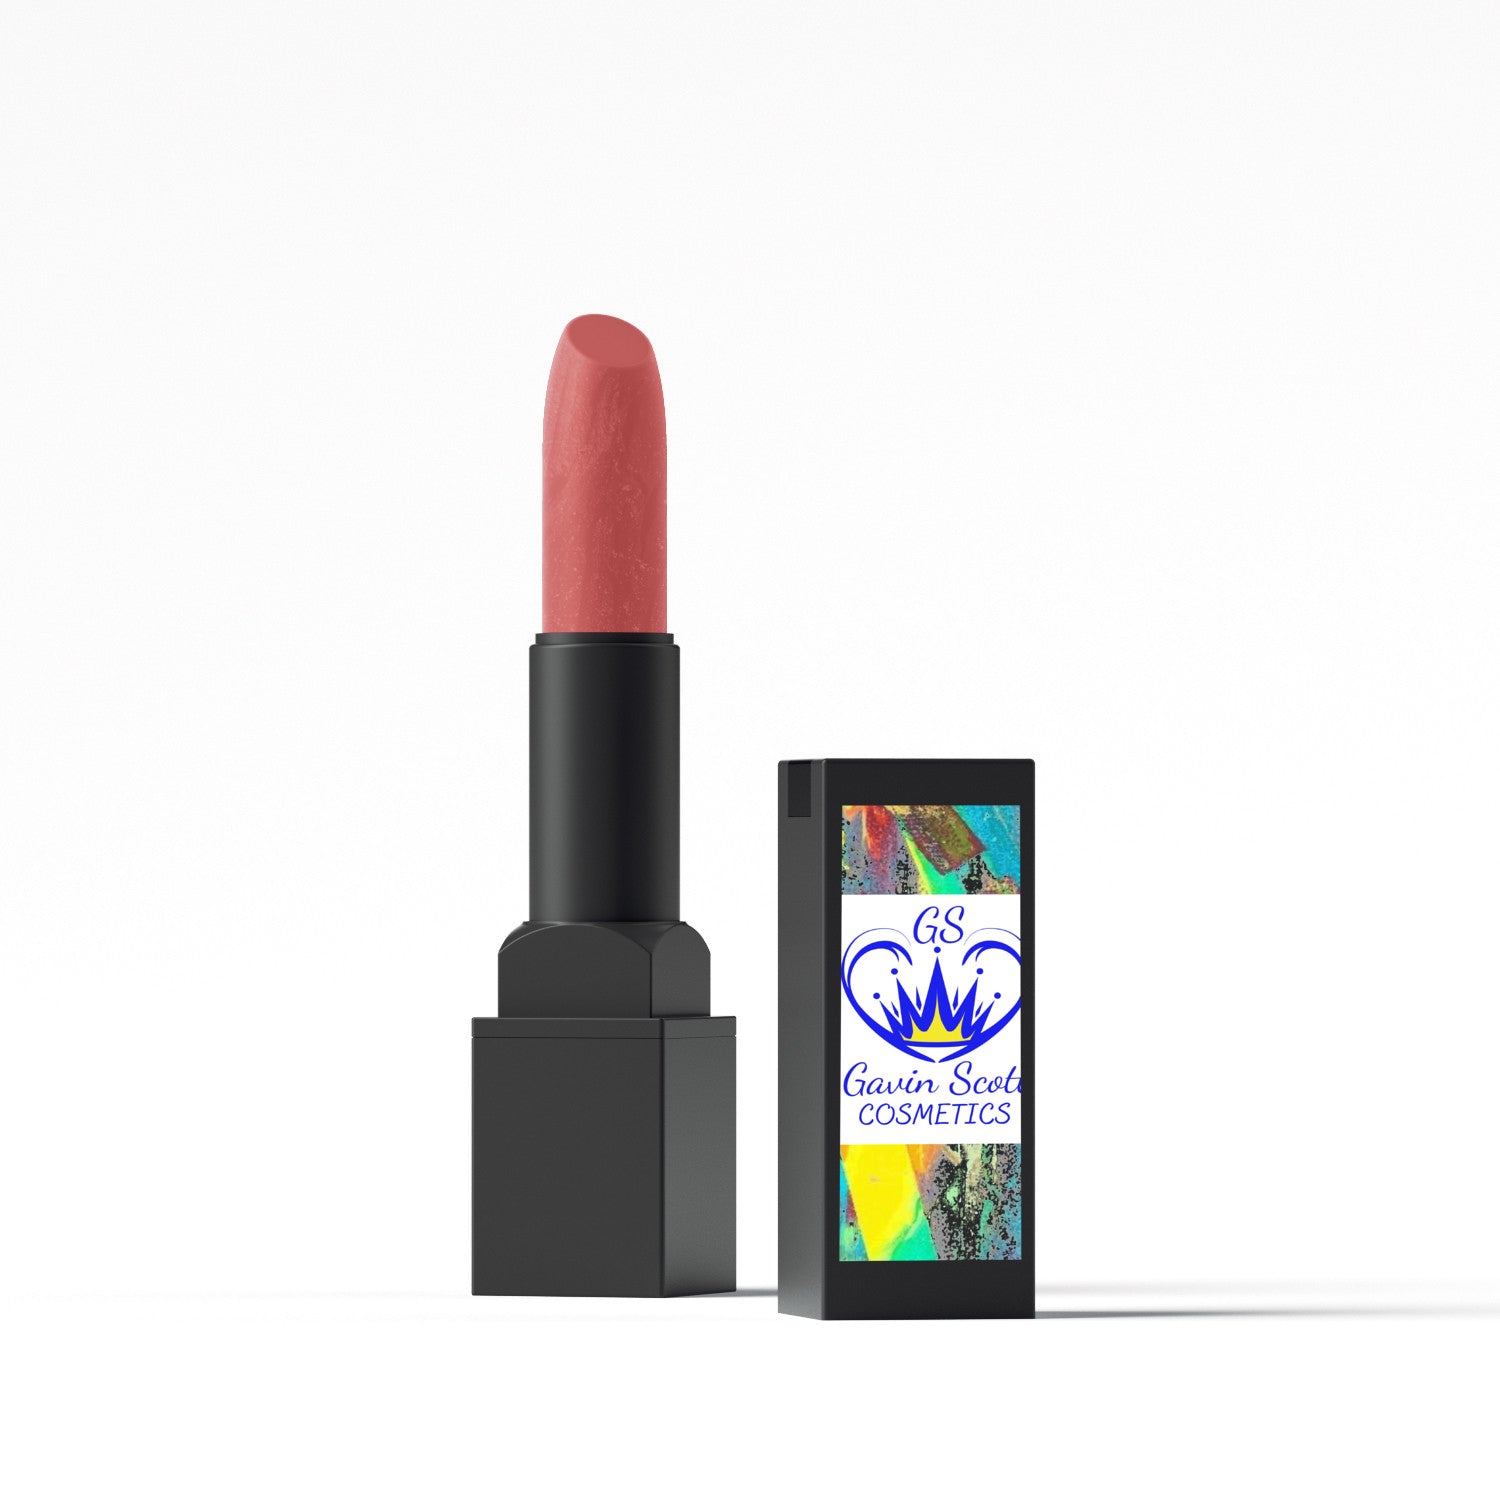 Lipstick-8042